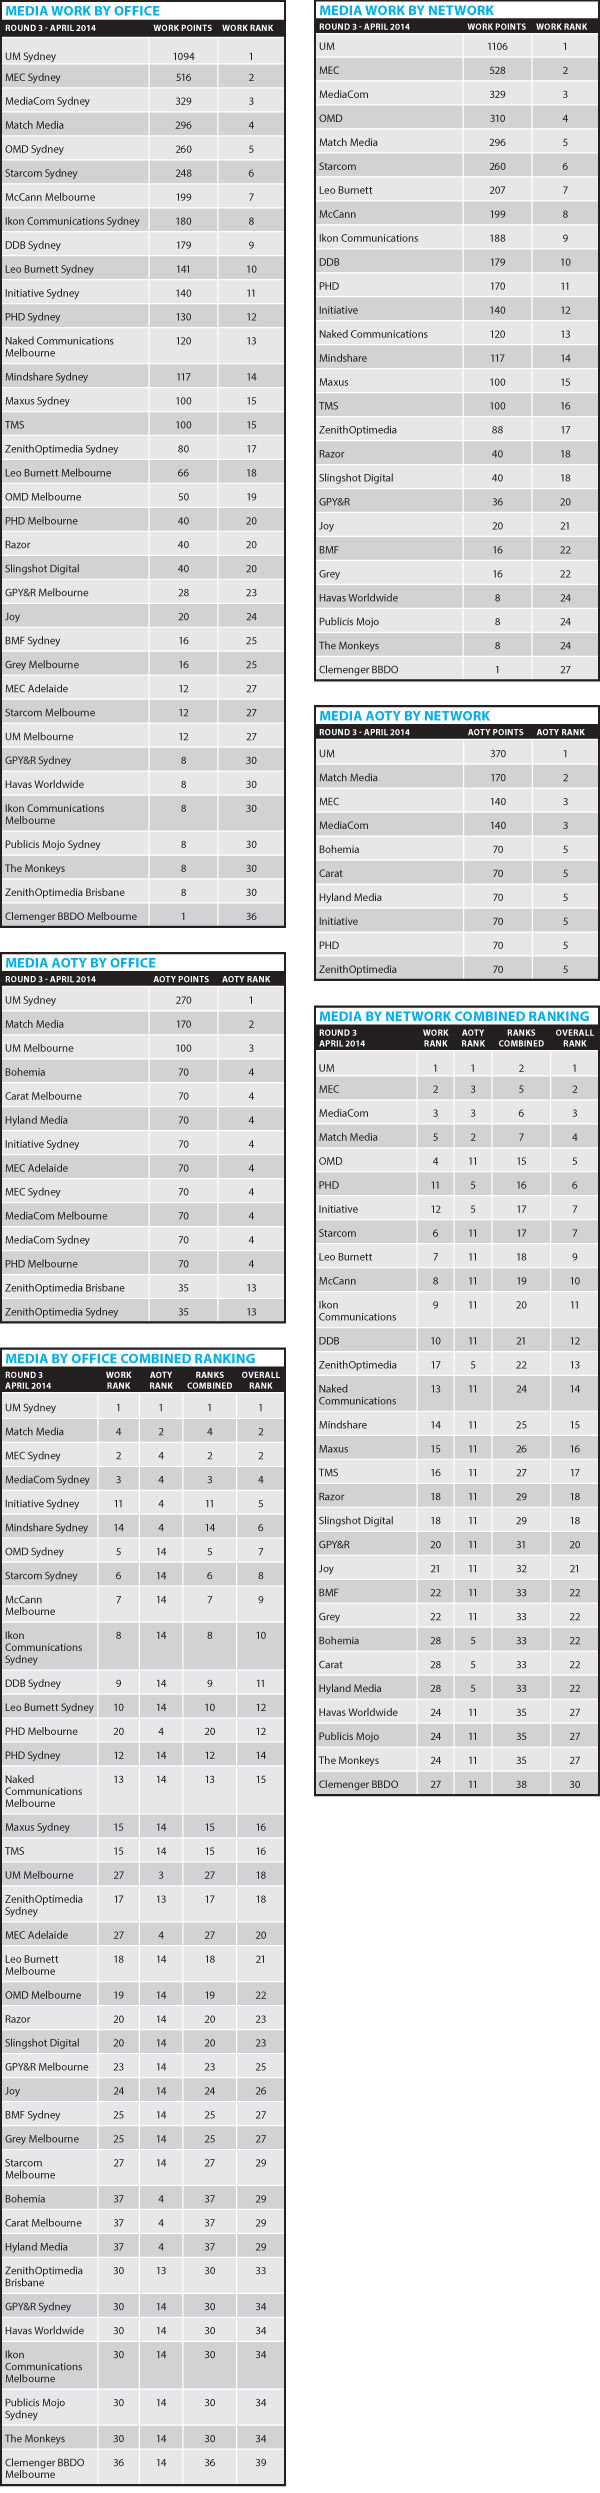 Media Agencies Rankings